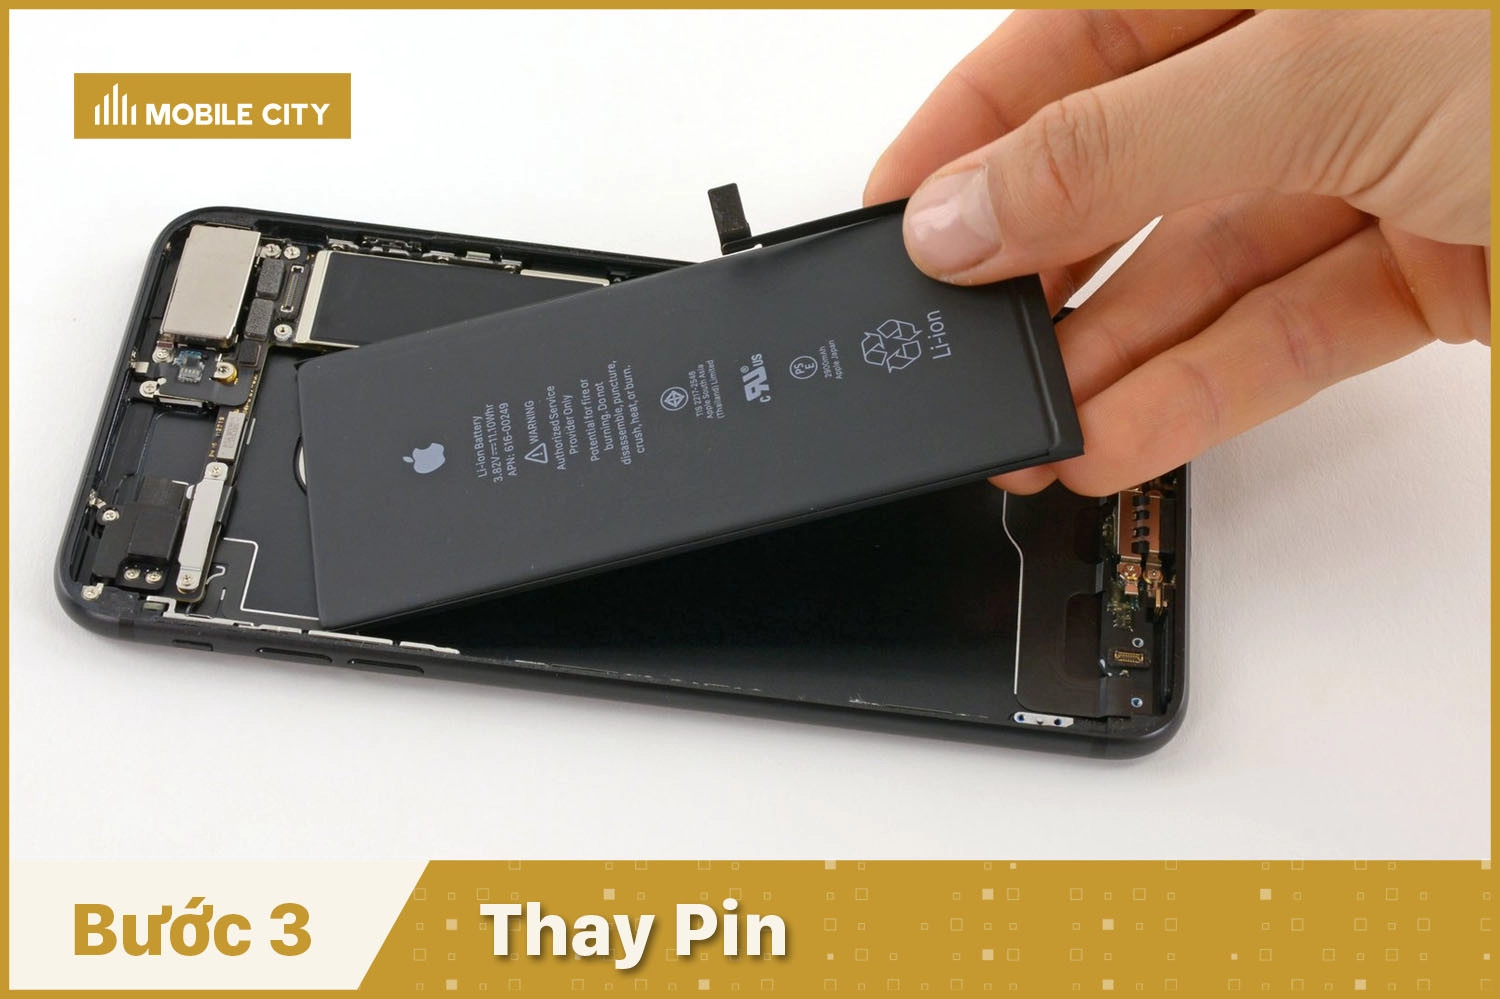 Thay Pin cho iPhone 7 Plus